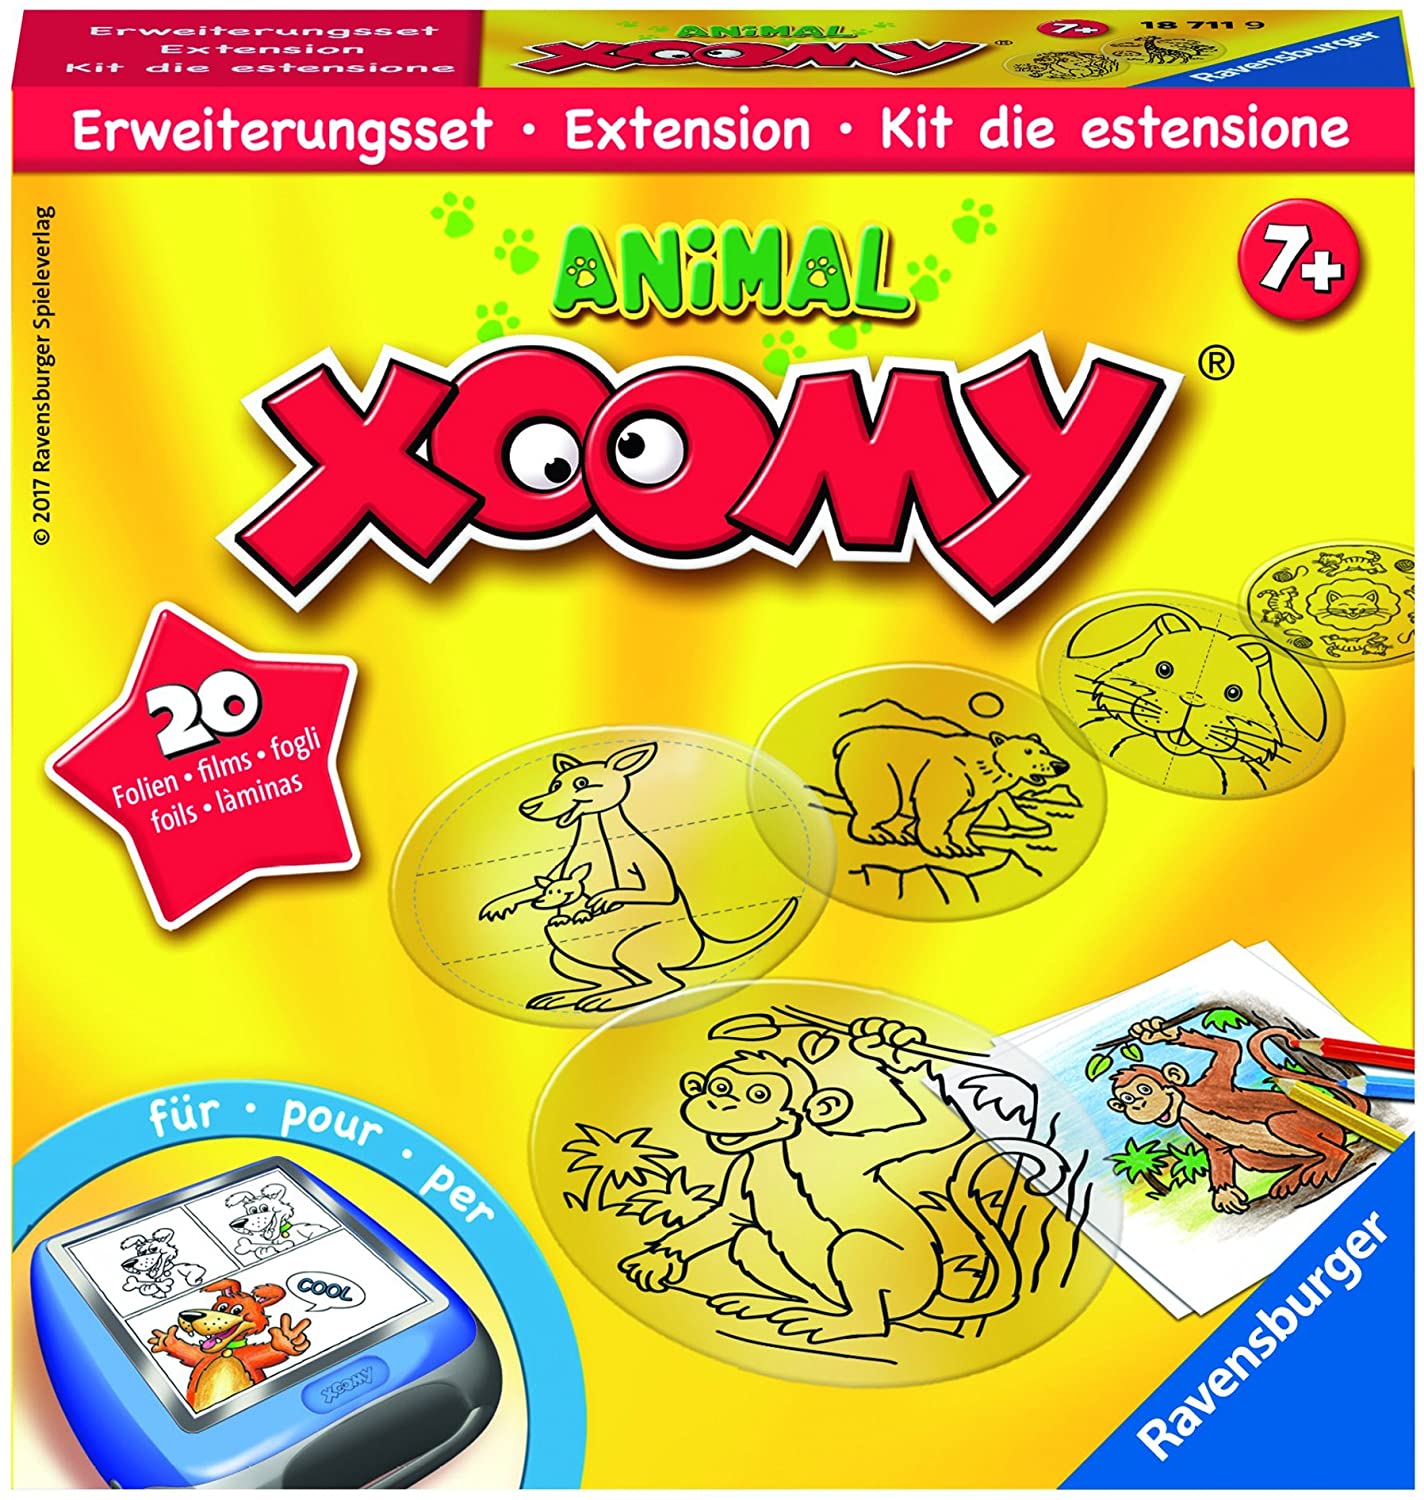 Ravensburger Xoomy 18711 Extension Kit Set